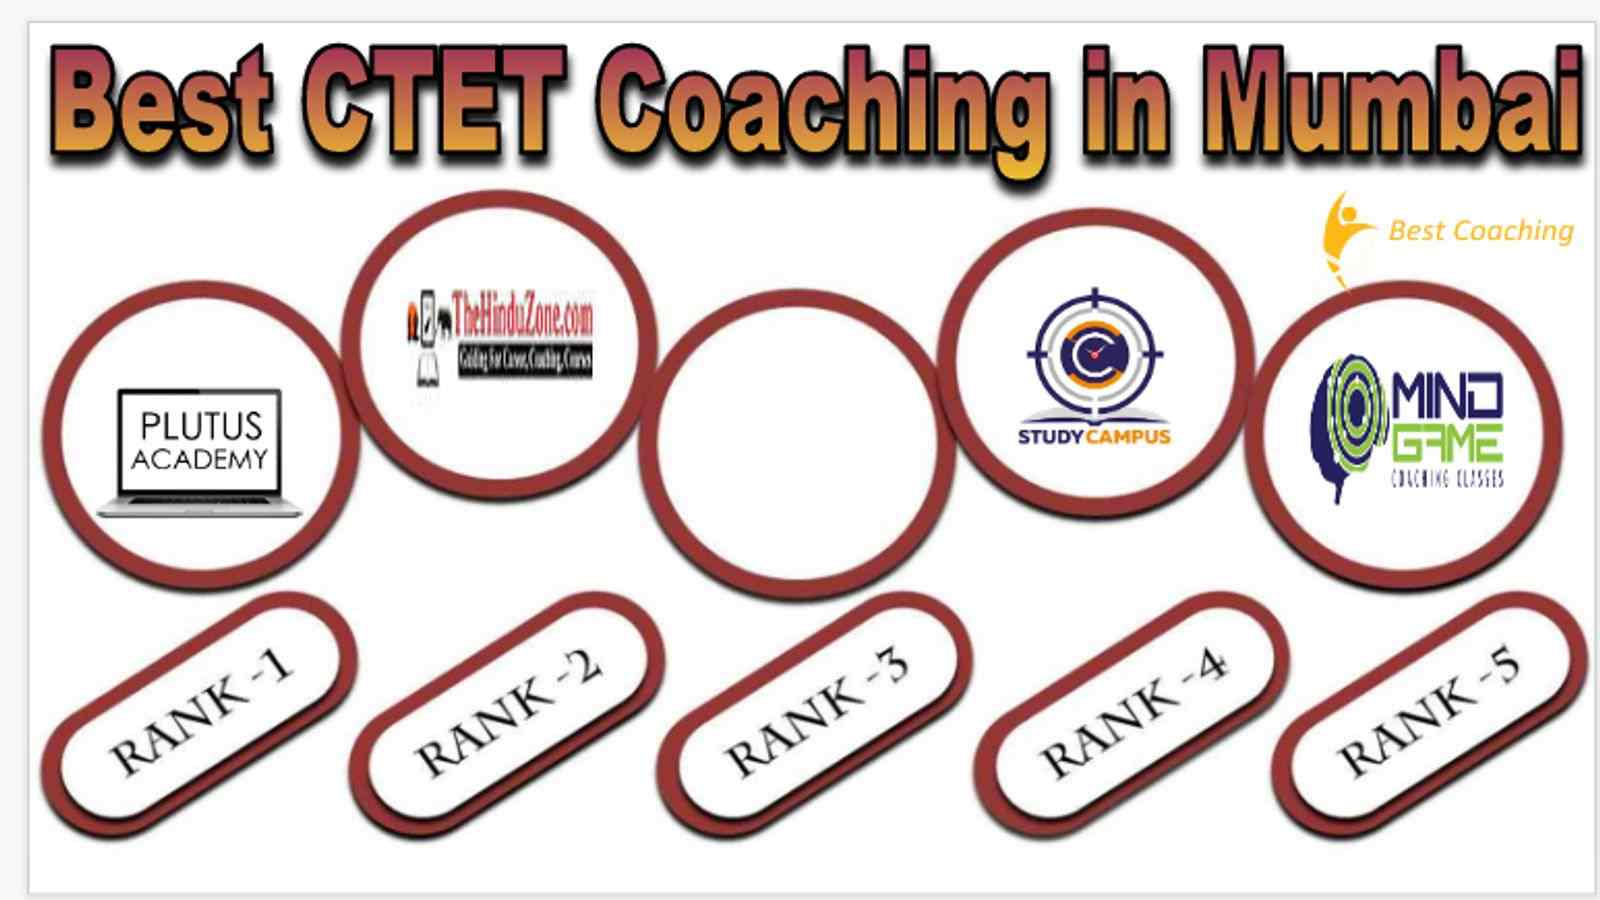 Best CTET Coaching in Mumbai